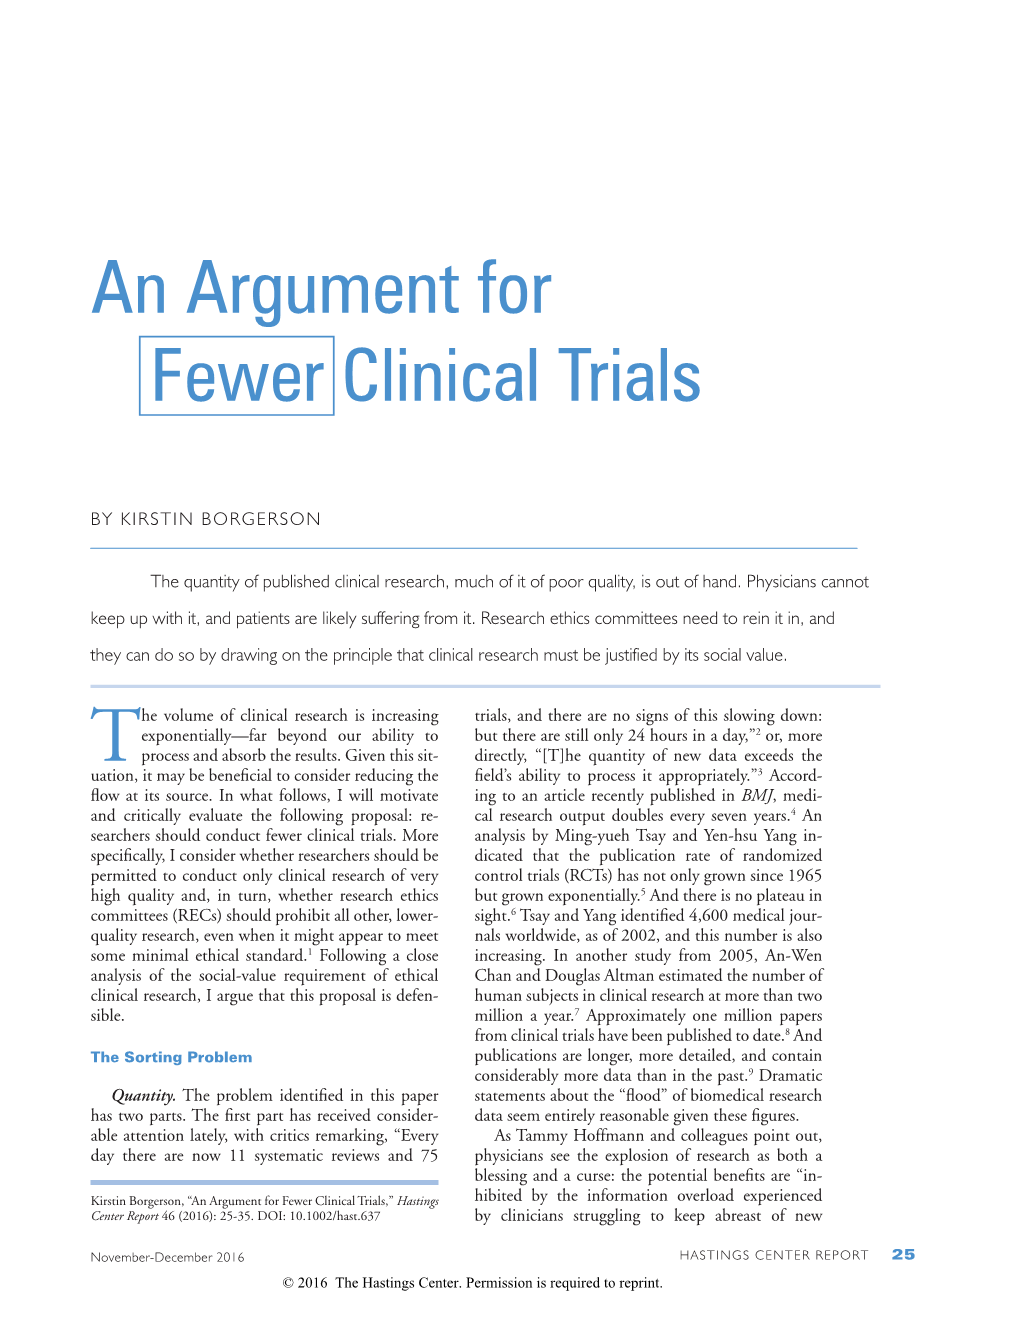 An Argument for Fewer Clinical Trials